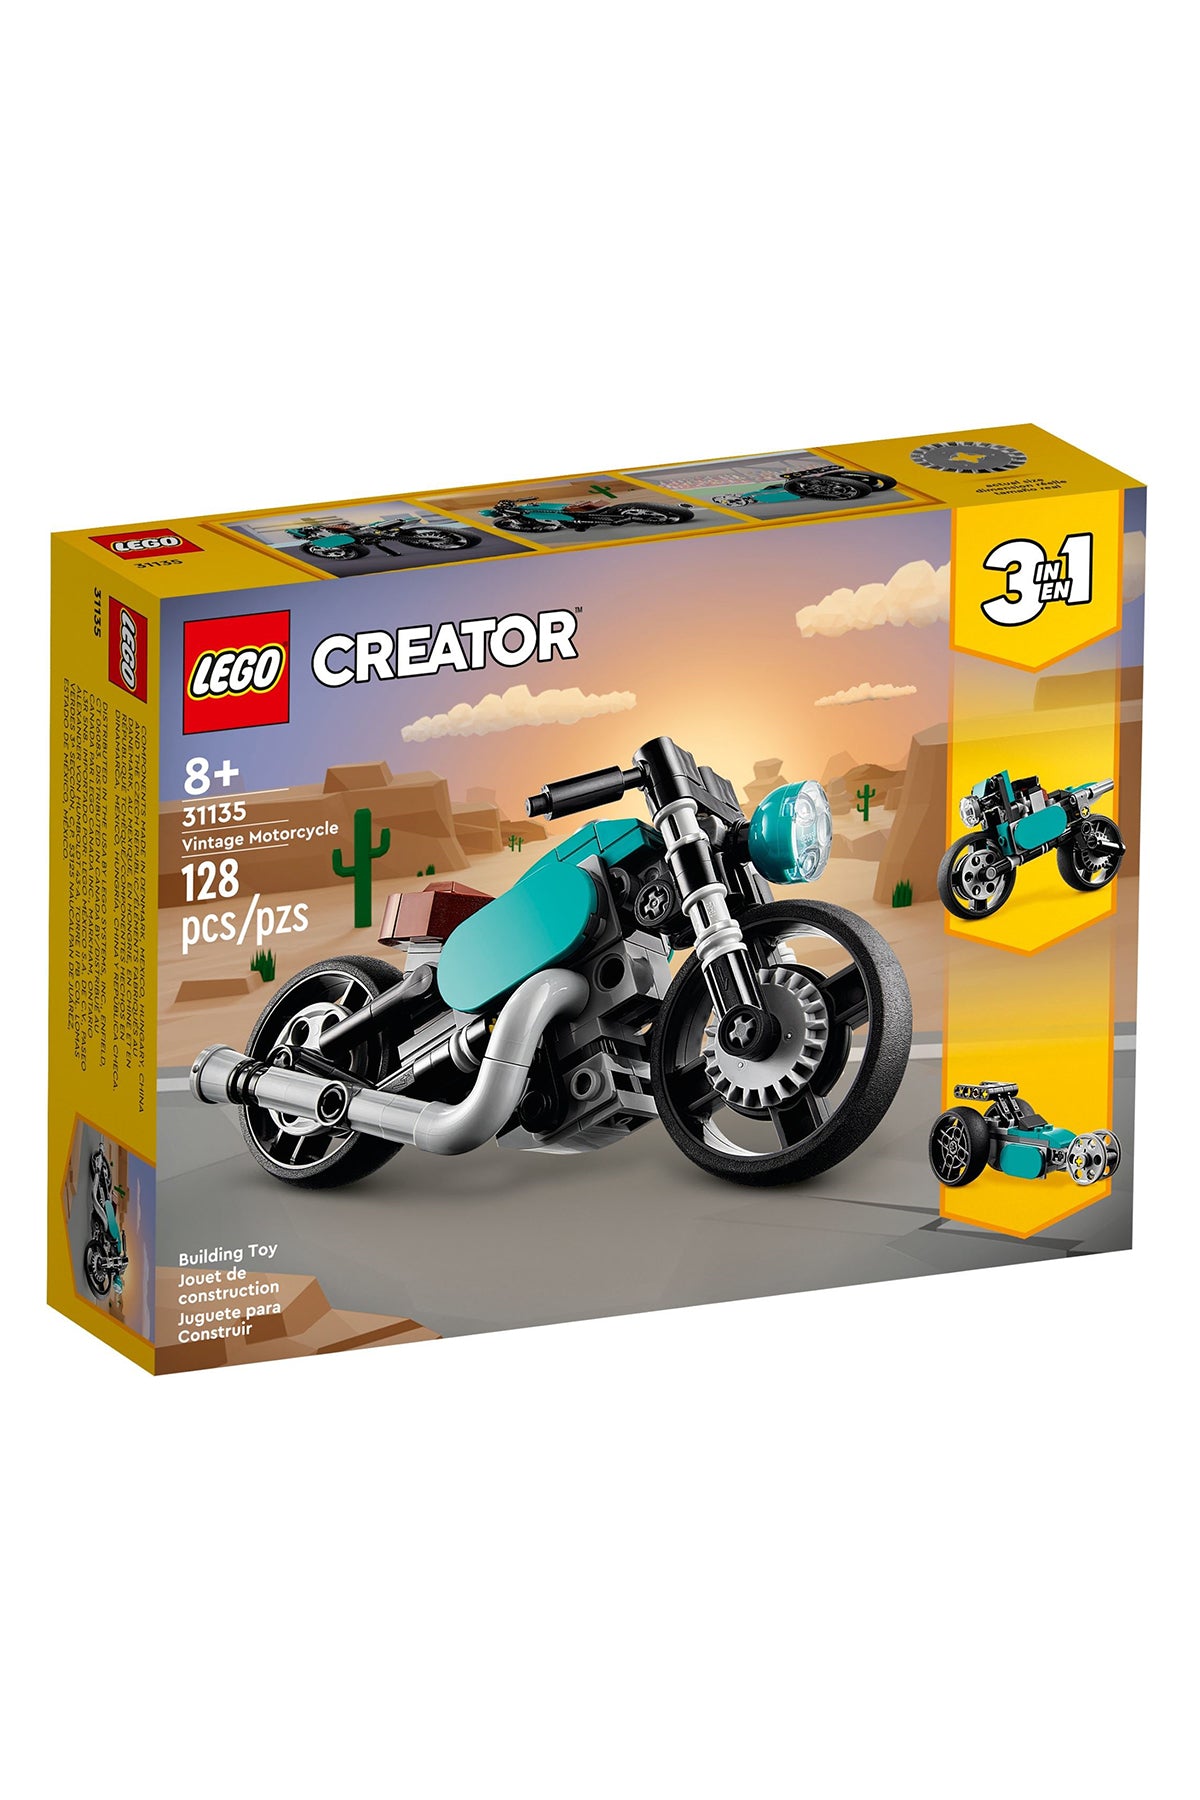 Lego Creator : 3-in-1 Vintage Motorcycle